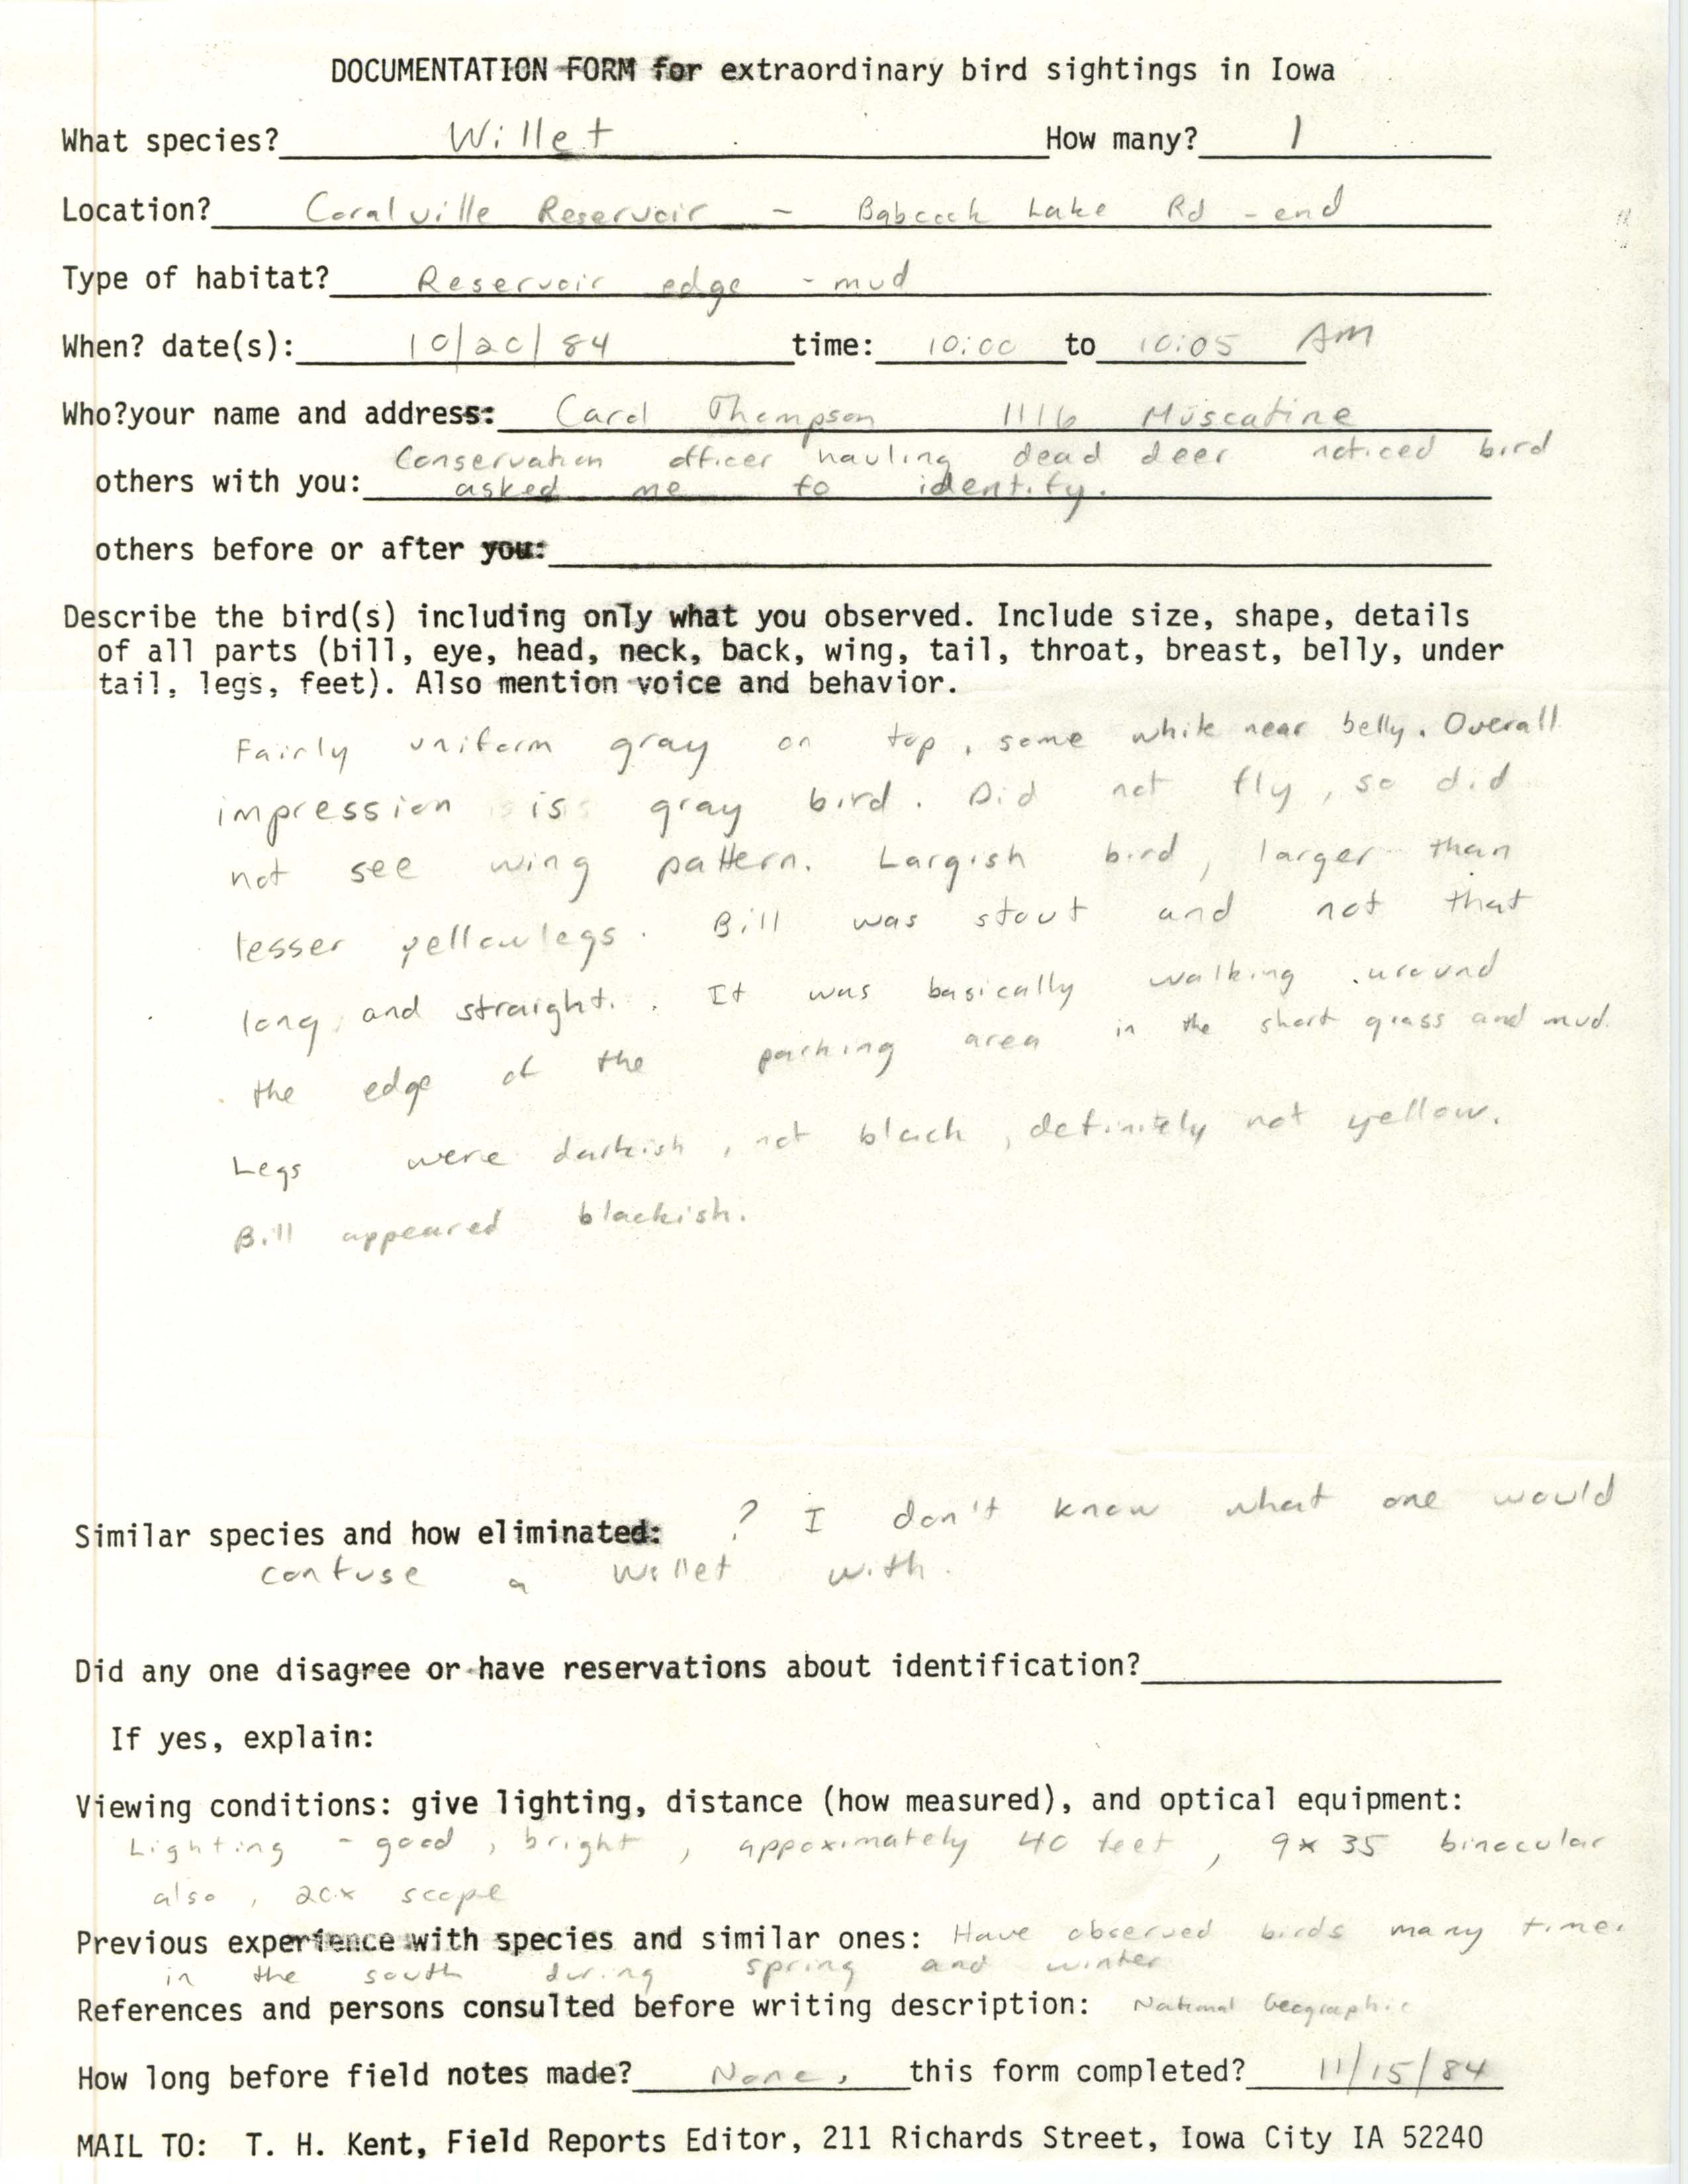 Rare bird documentation form for Willet at Coralville Reservoir, 1984